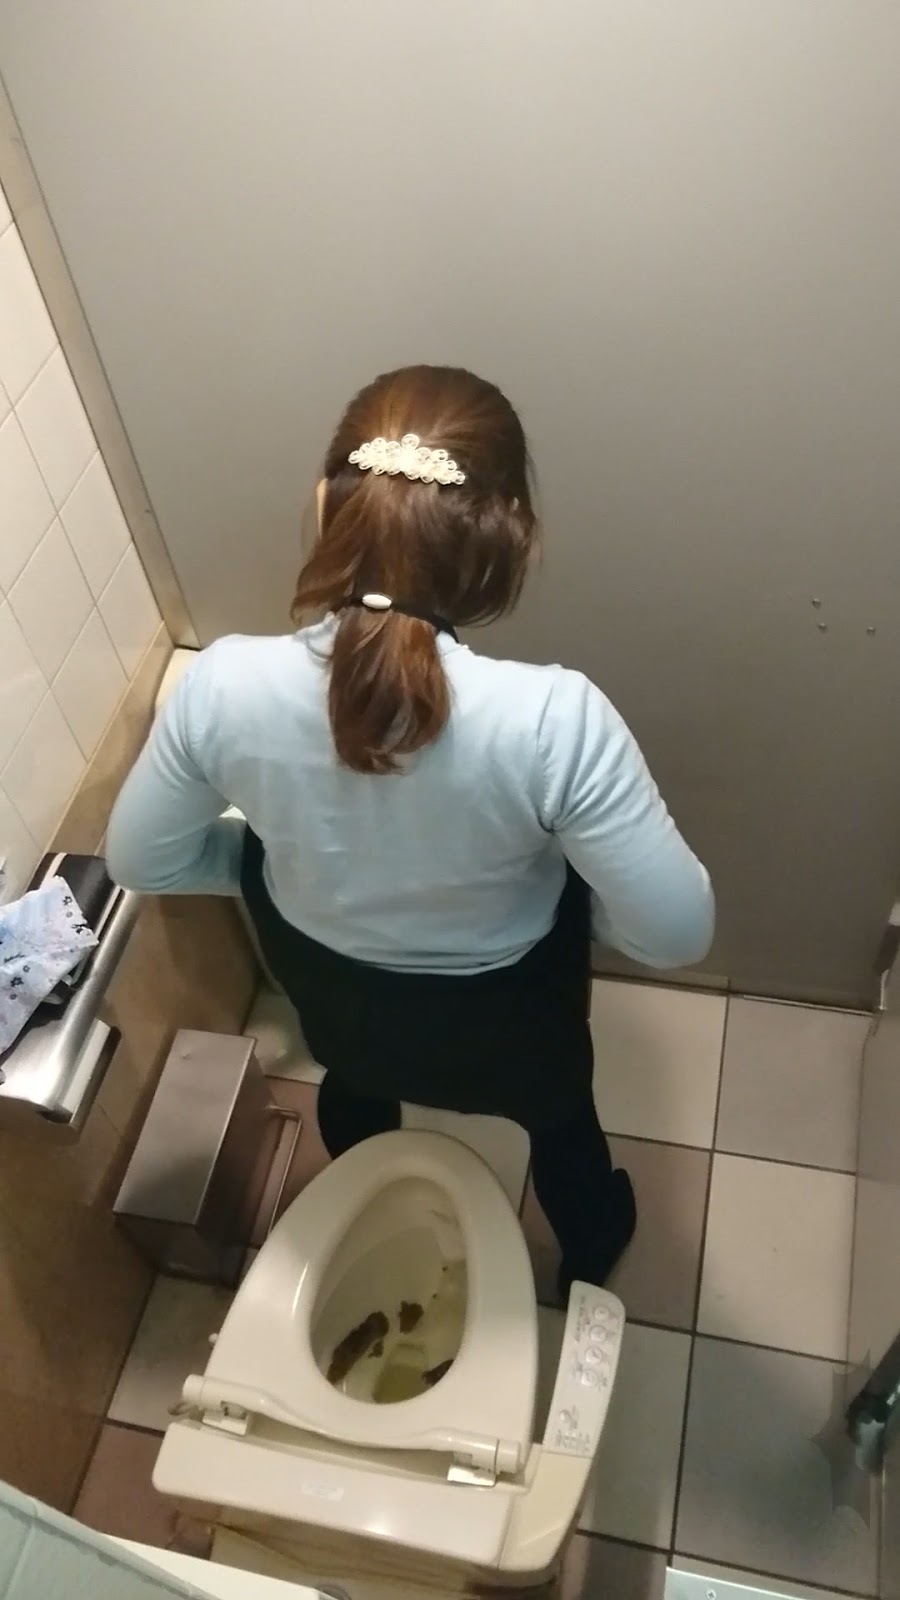 В туалете снимают видео с писающей девушкой